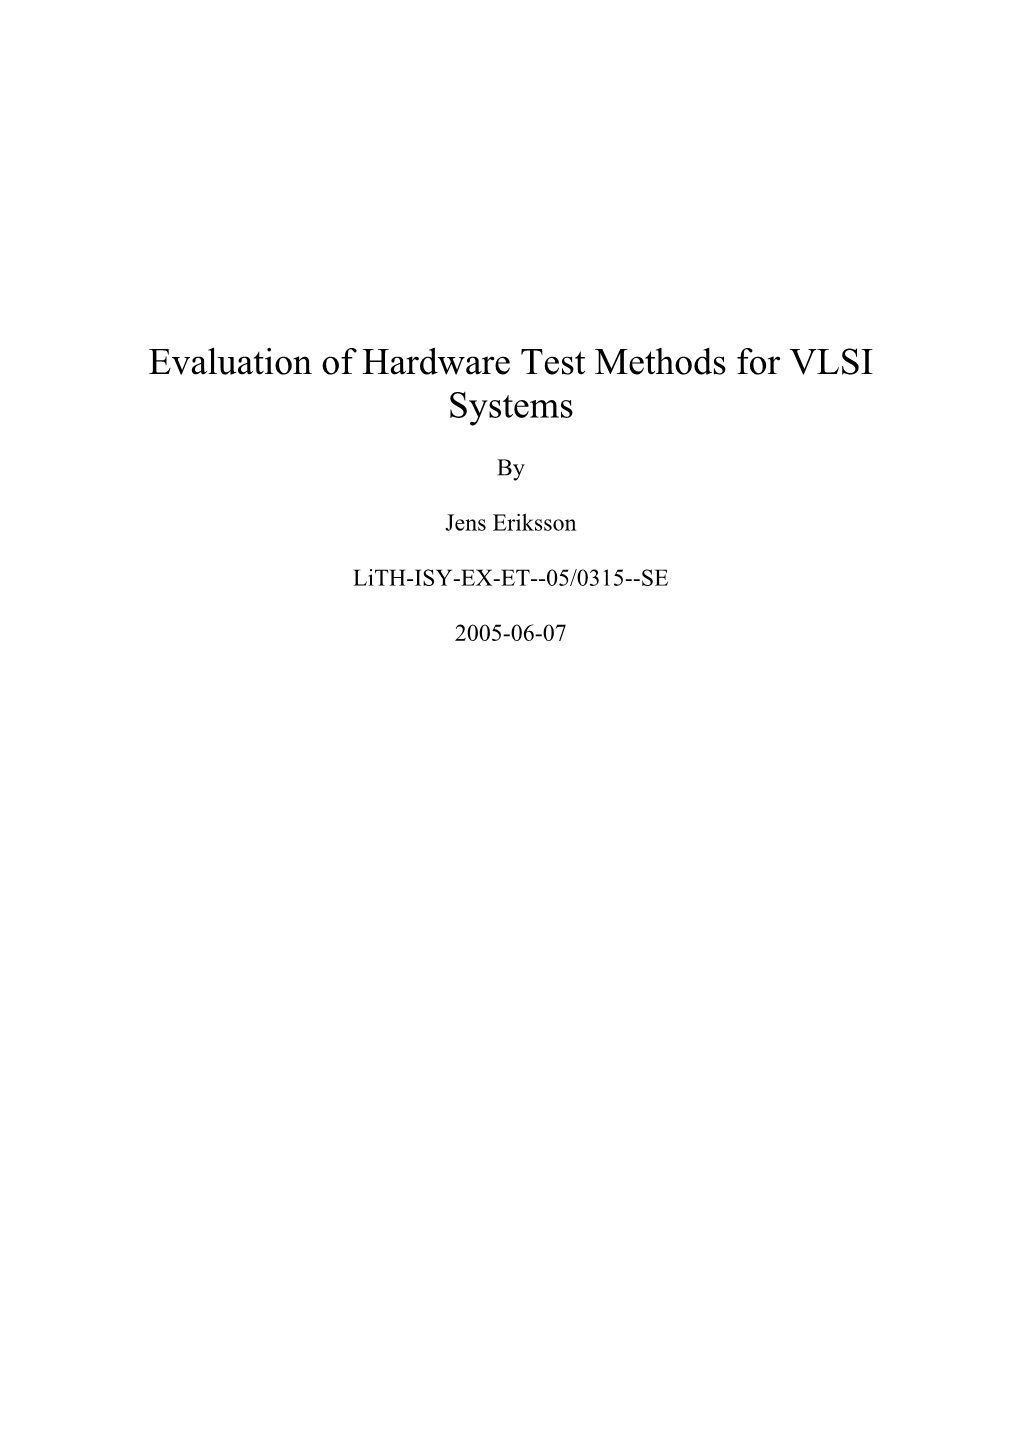 Evaluation of Hardware Test Methods for VLSI Systems